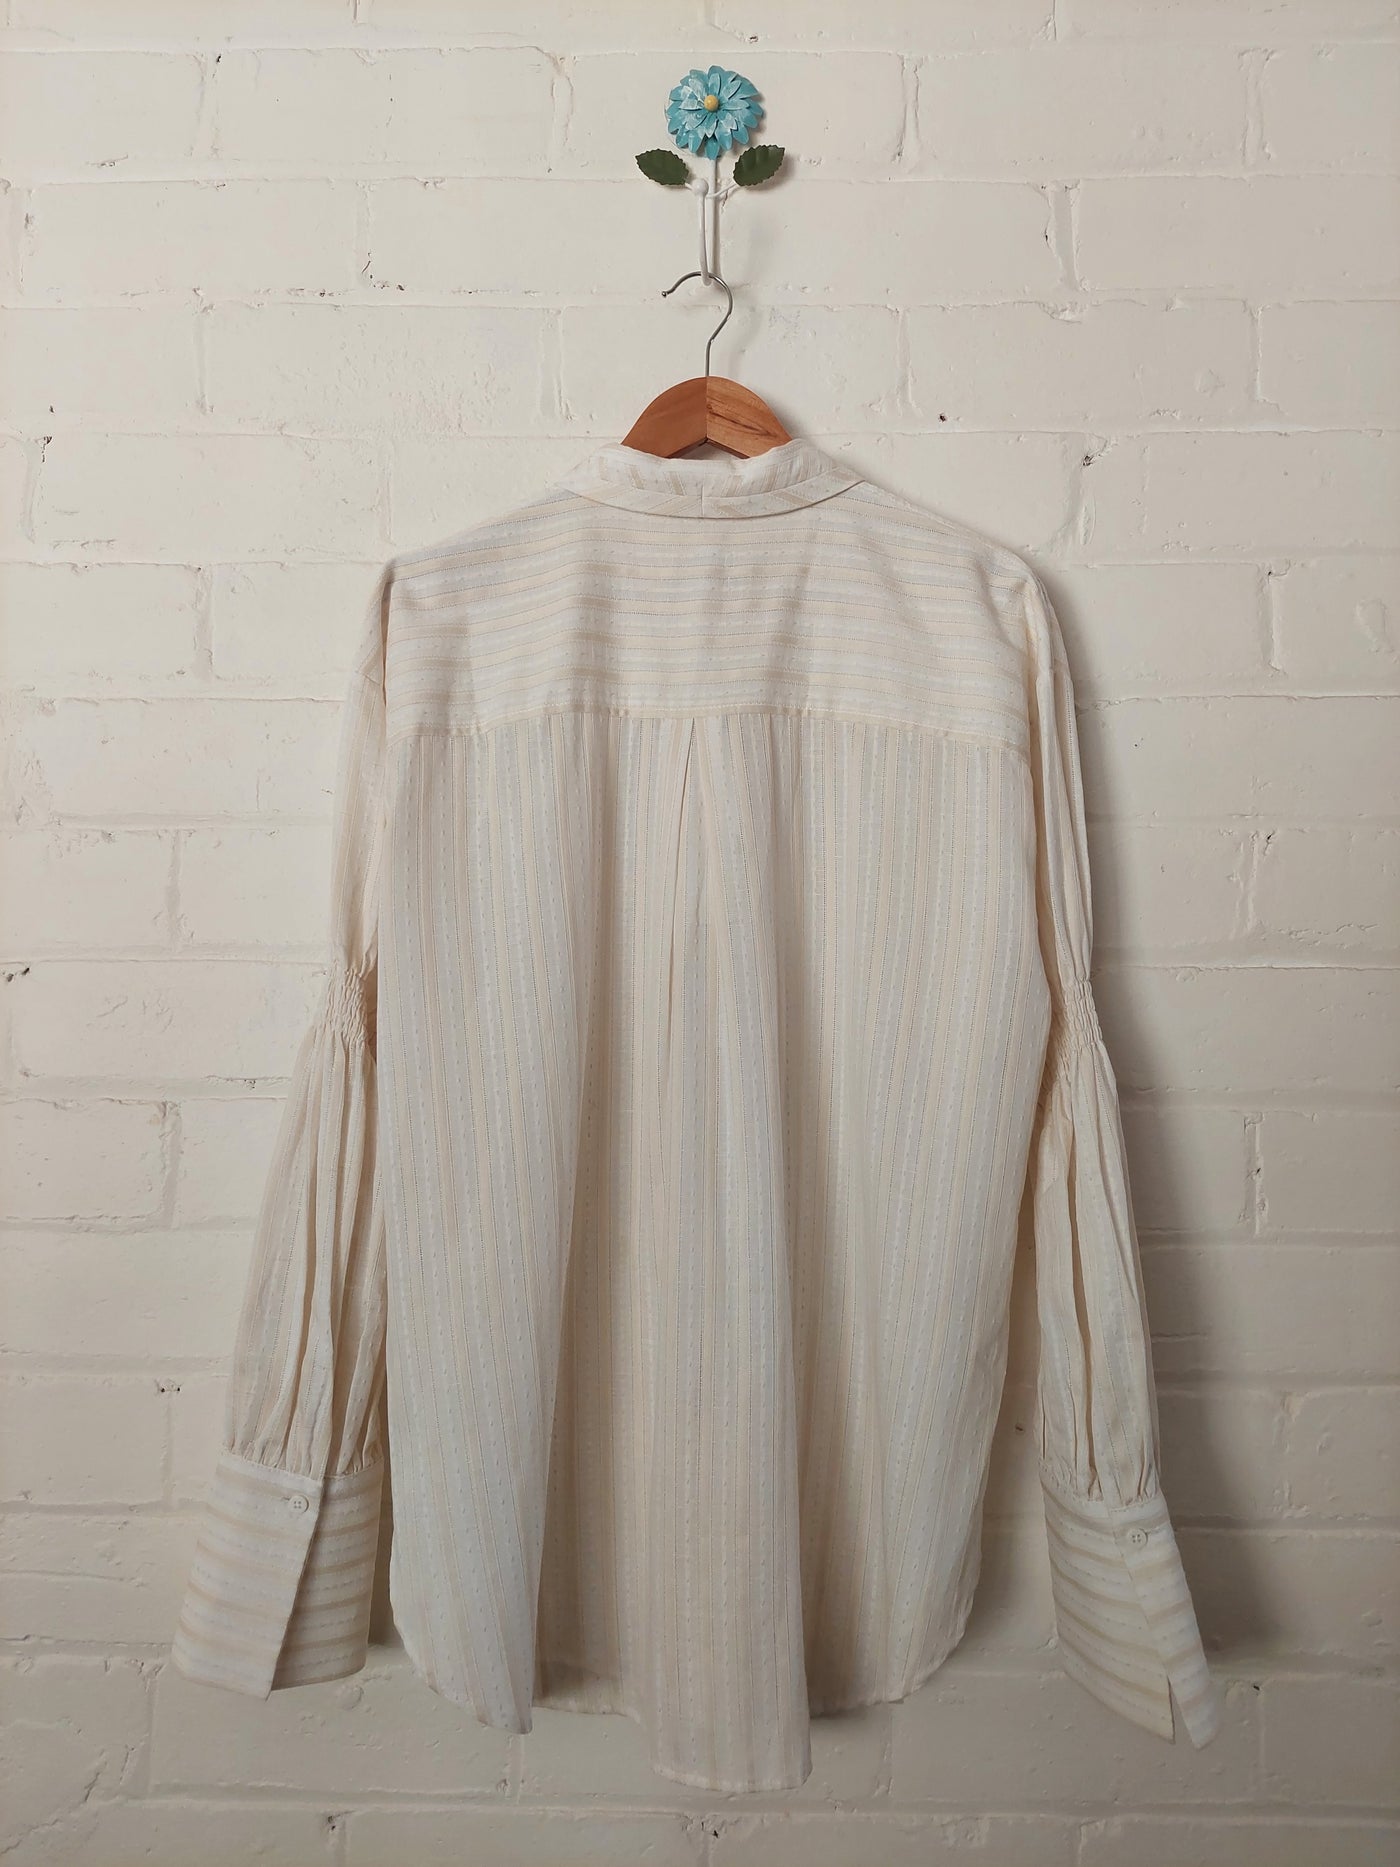 Shona Joy BNWT 'Lindsay' Shirred Sleeve Shirt in Ivory Natural, Size 12